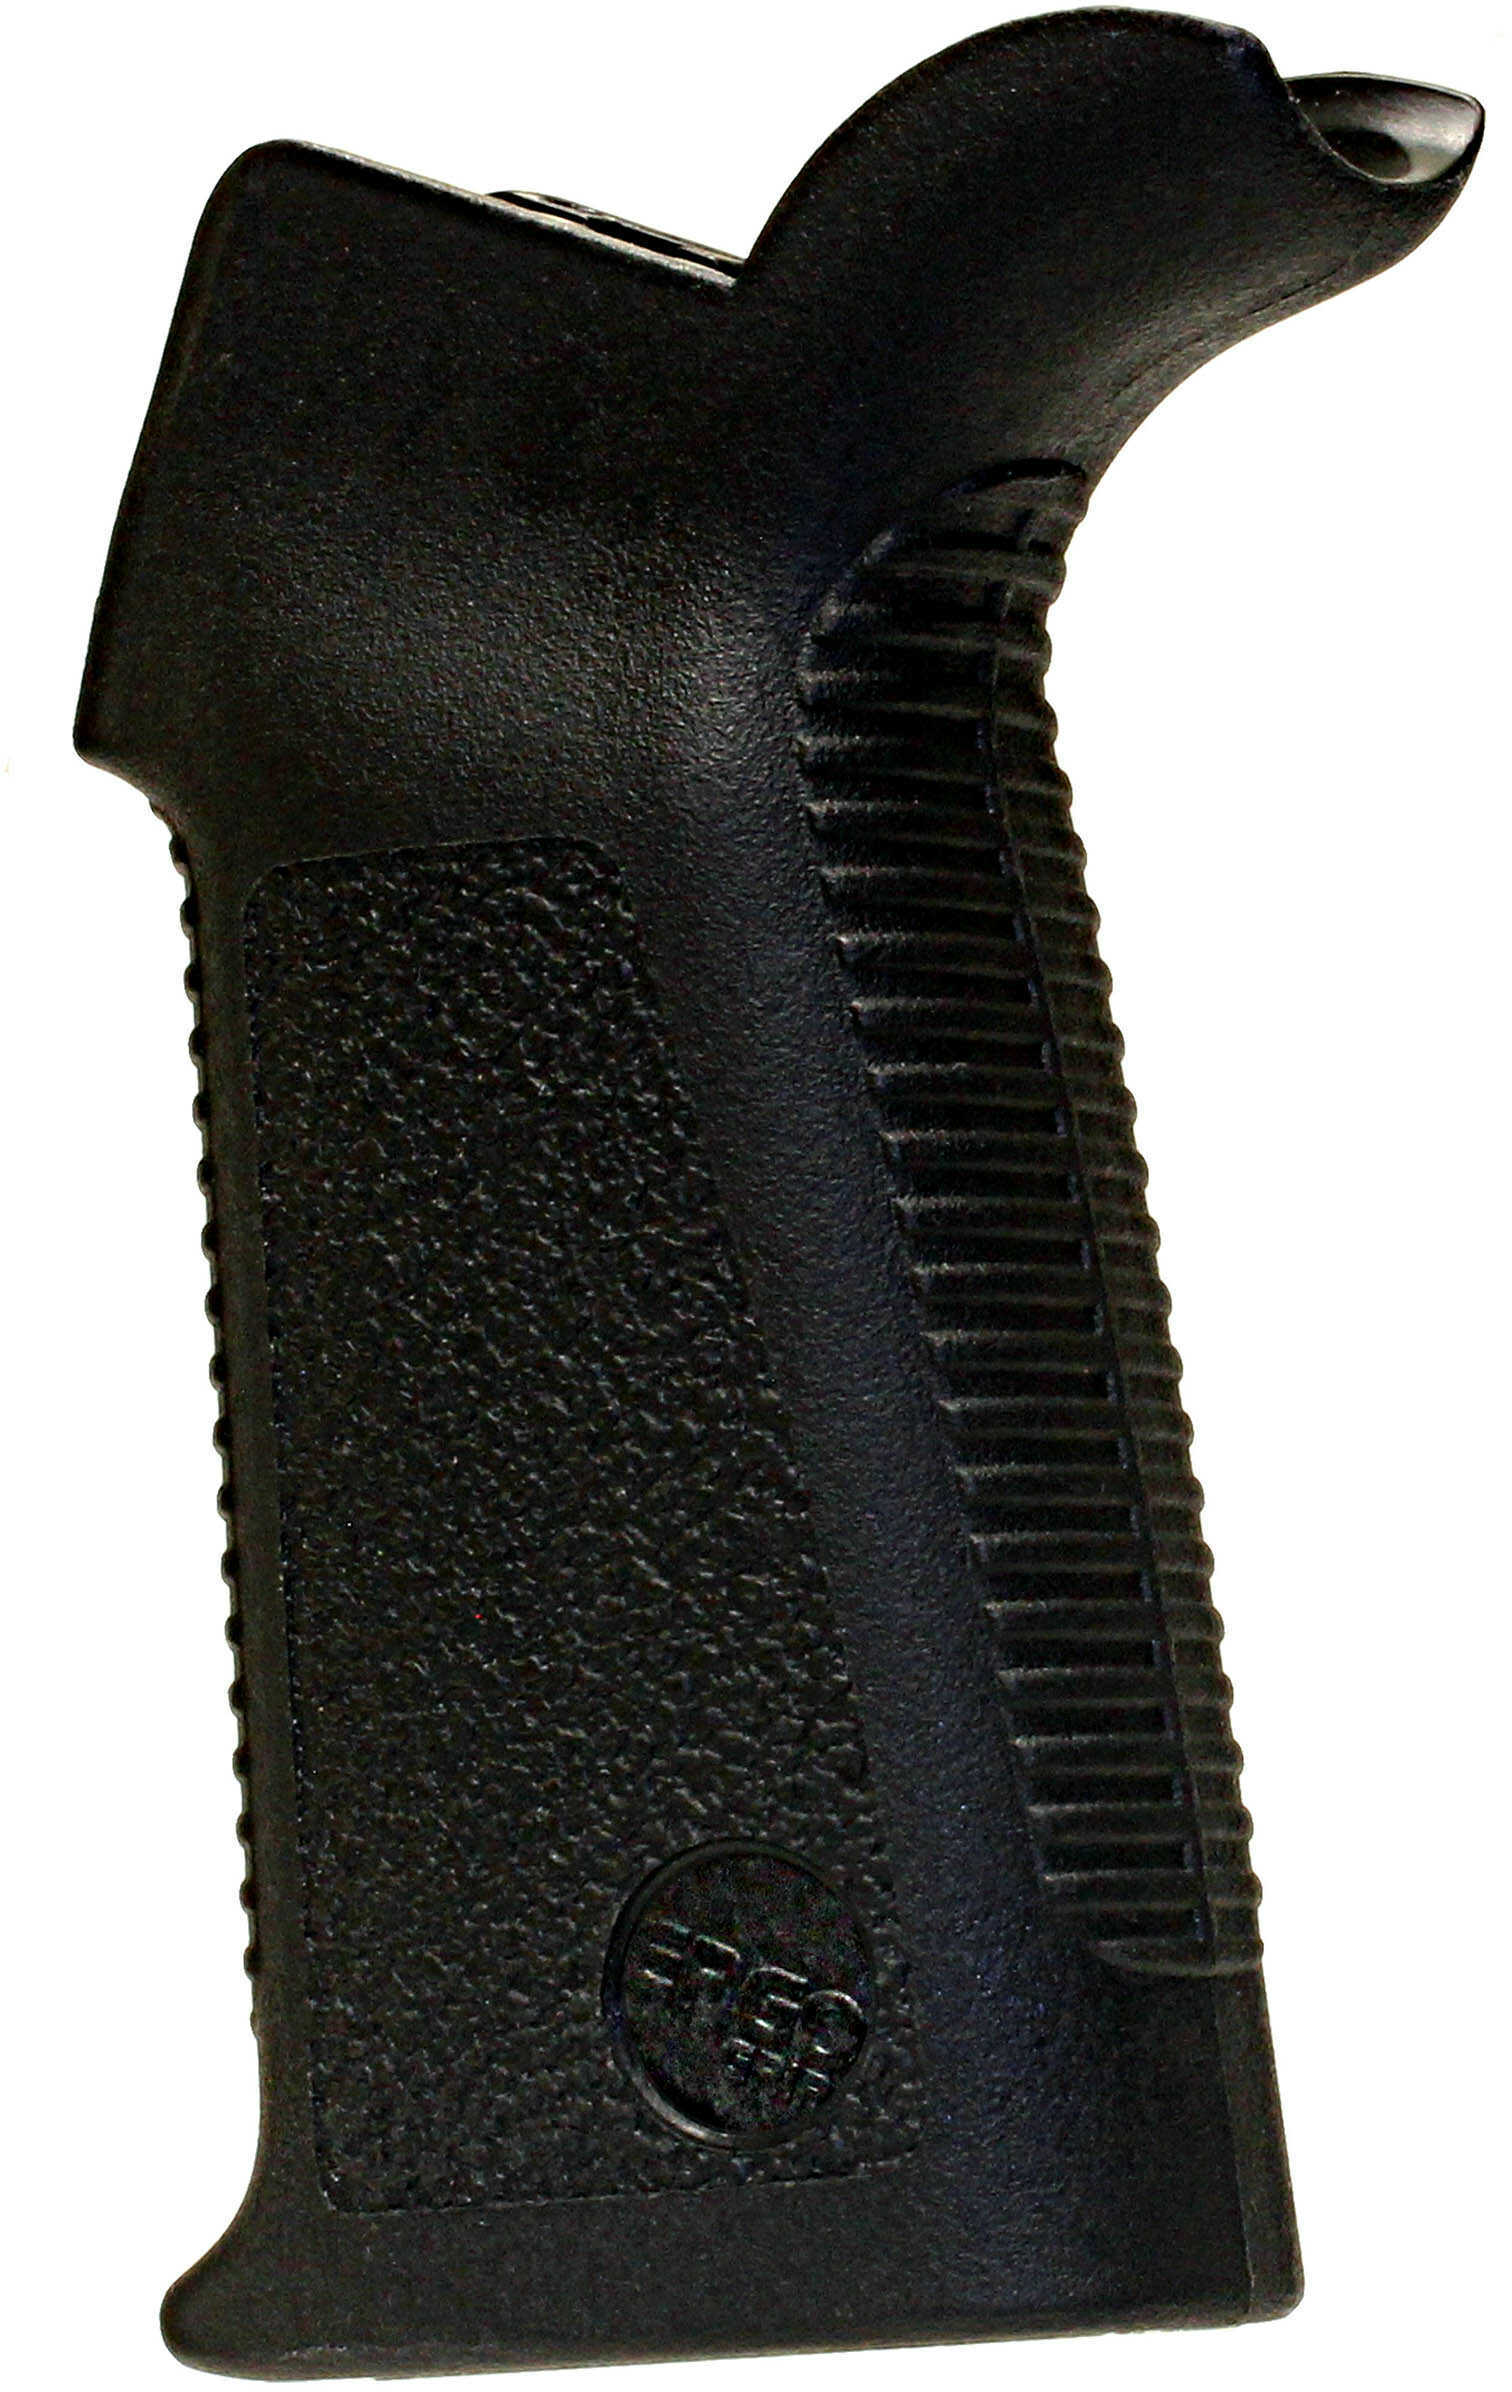 Ergo Grip MSR Fits Compact Black 4092-BK